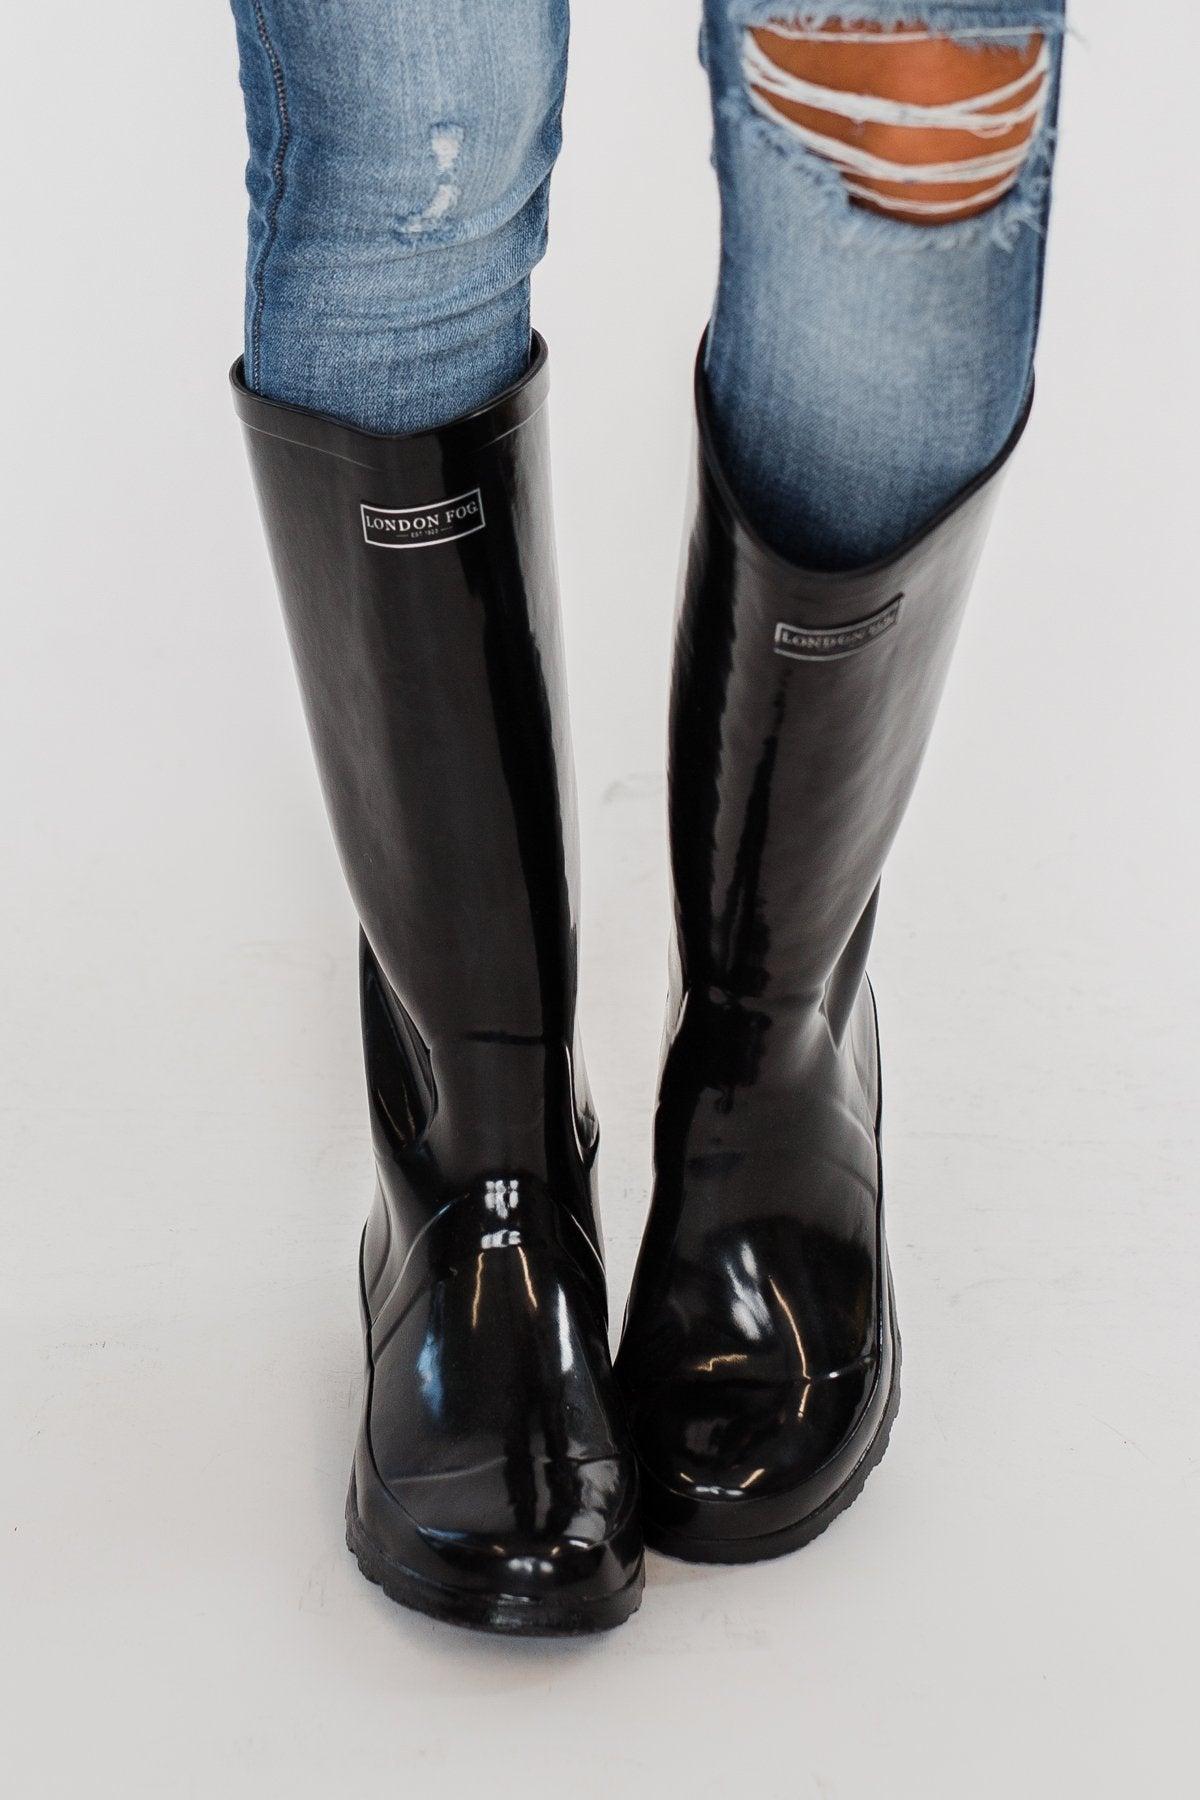 London Fog Thames Rain Boots- Black 